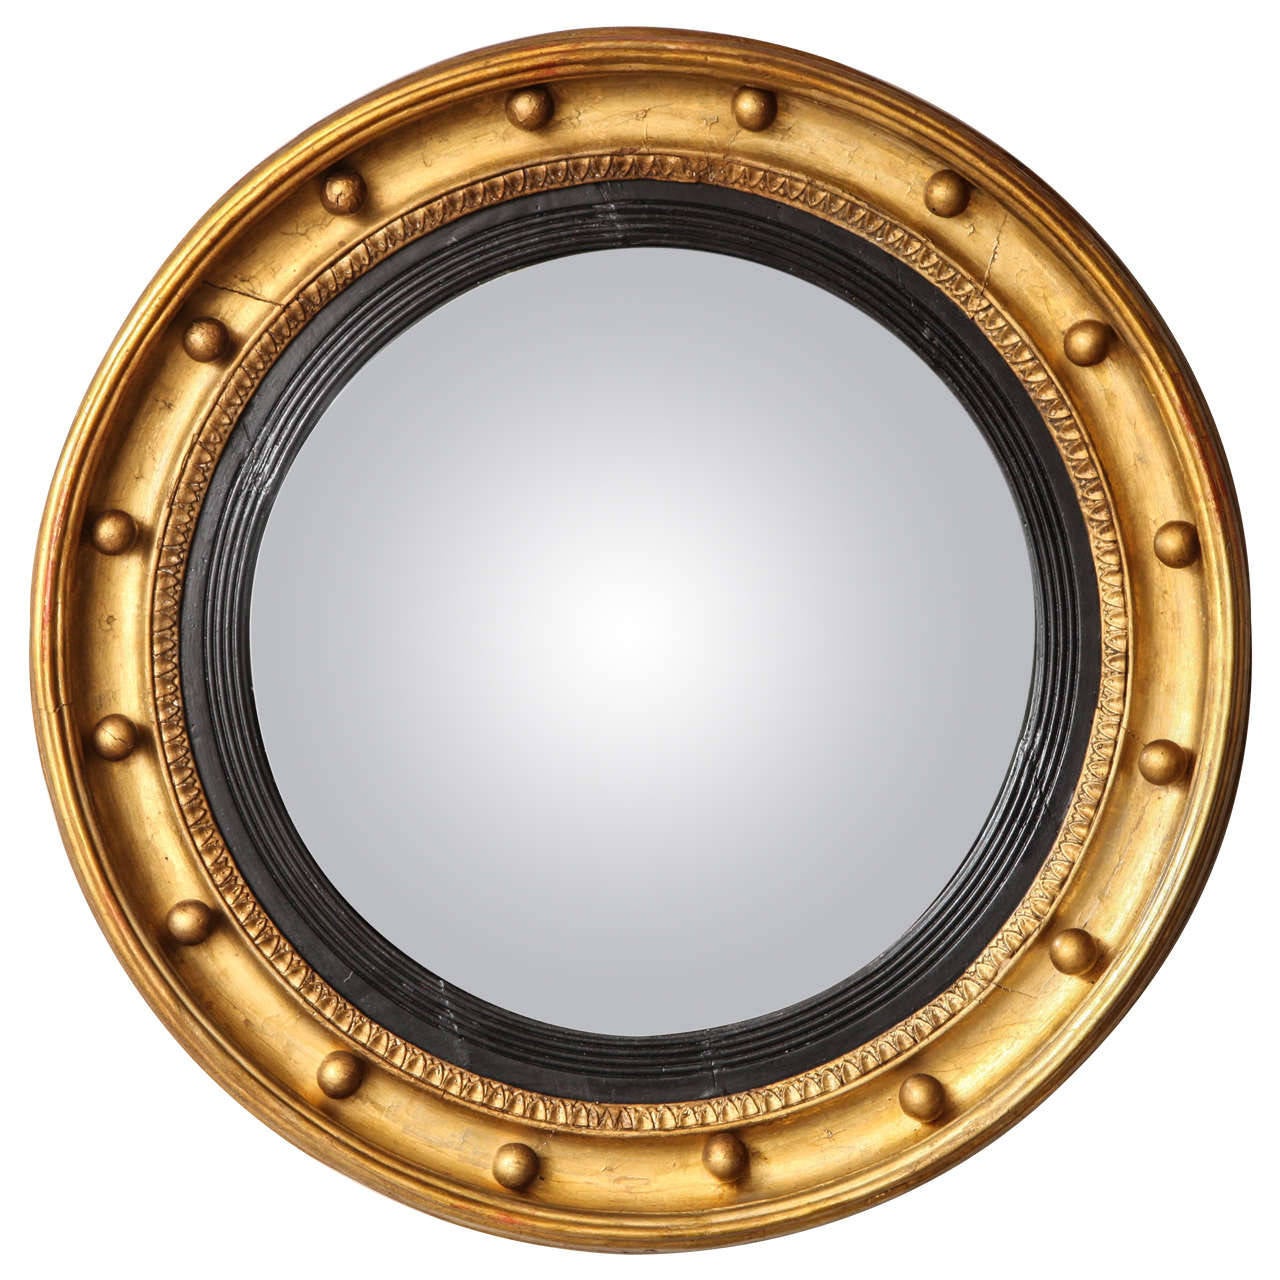 An English Regency Bulls Eye Mirror